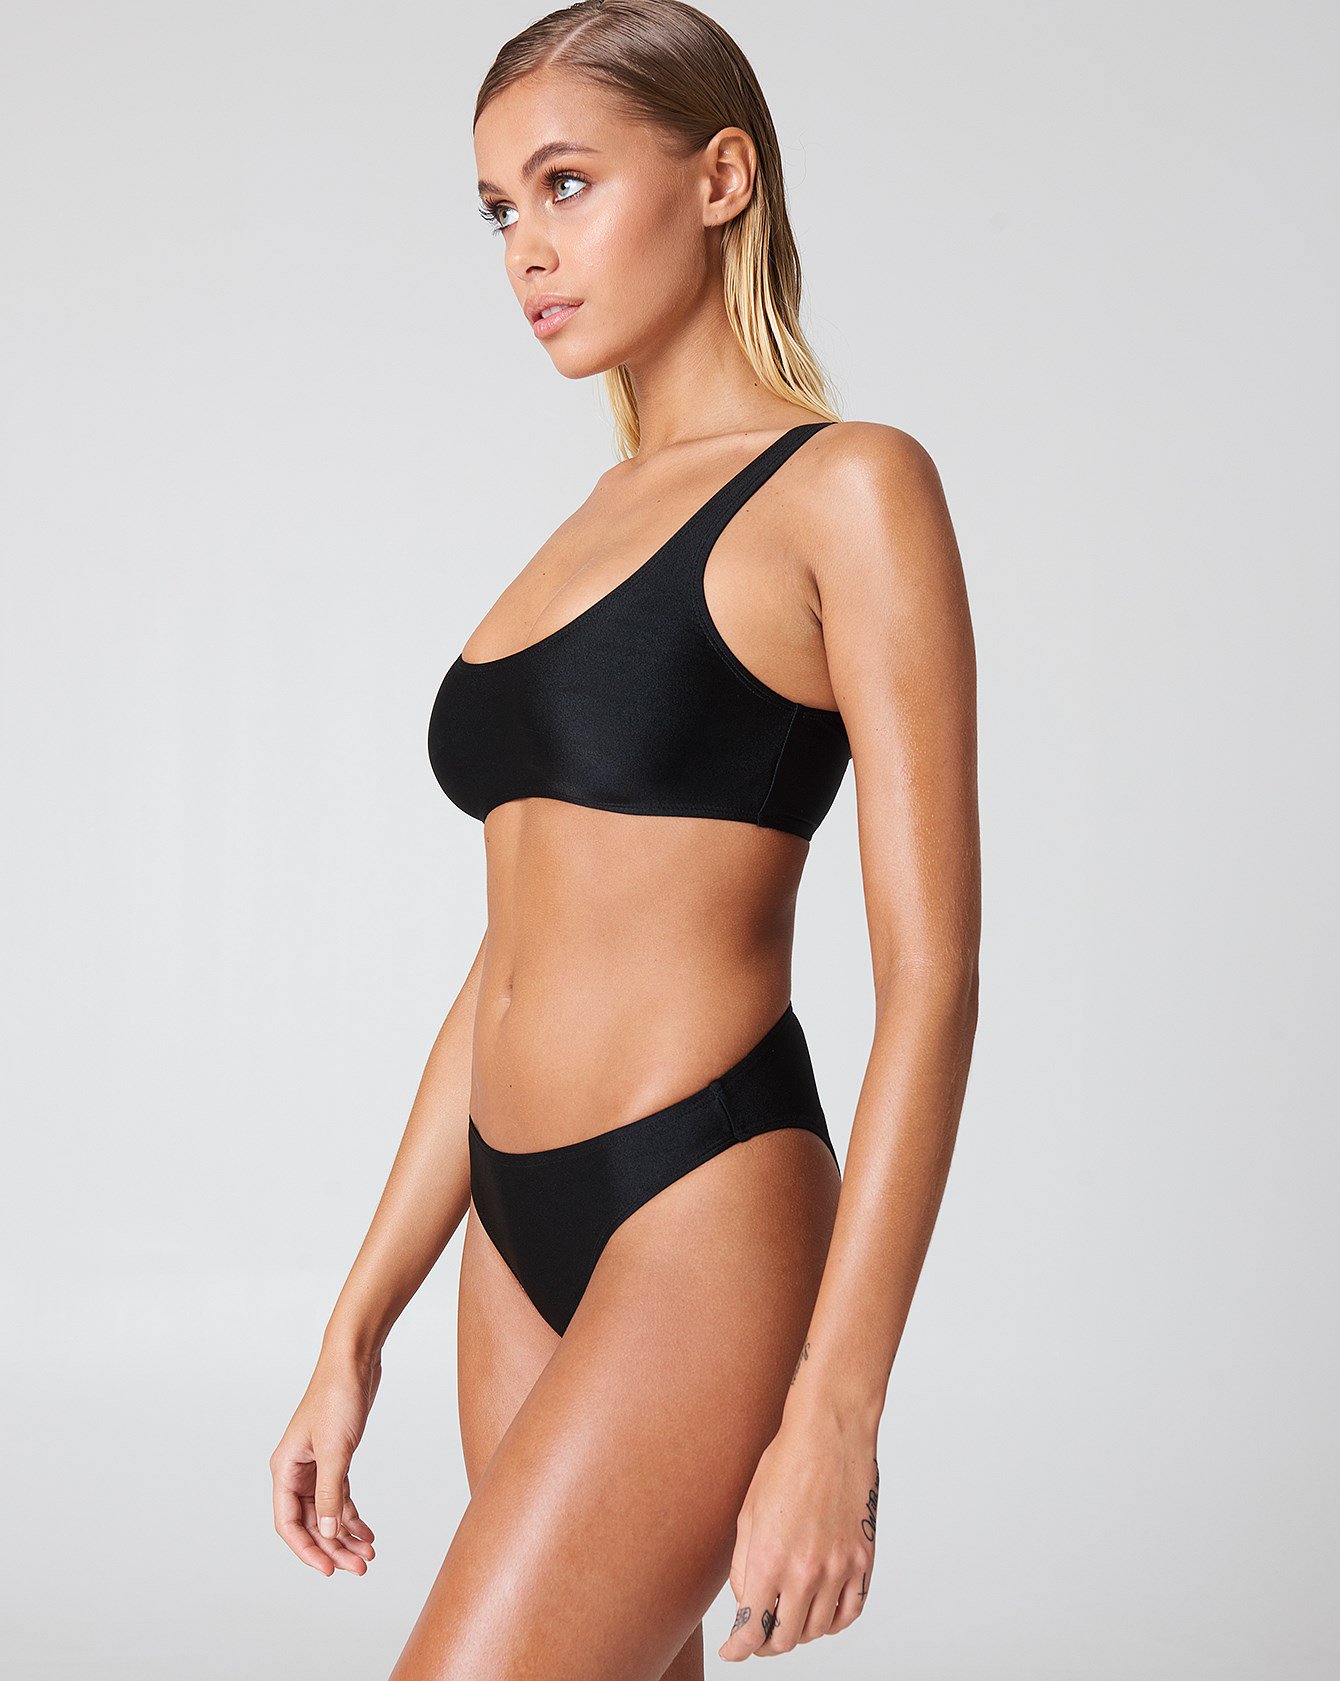 Black Sporty Bikini Outfit